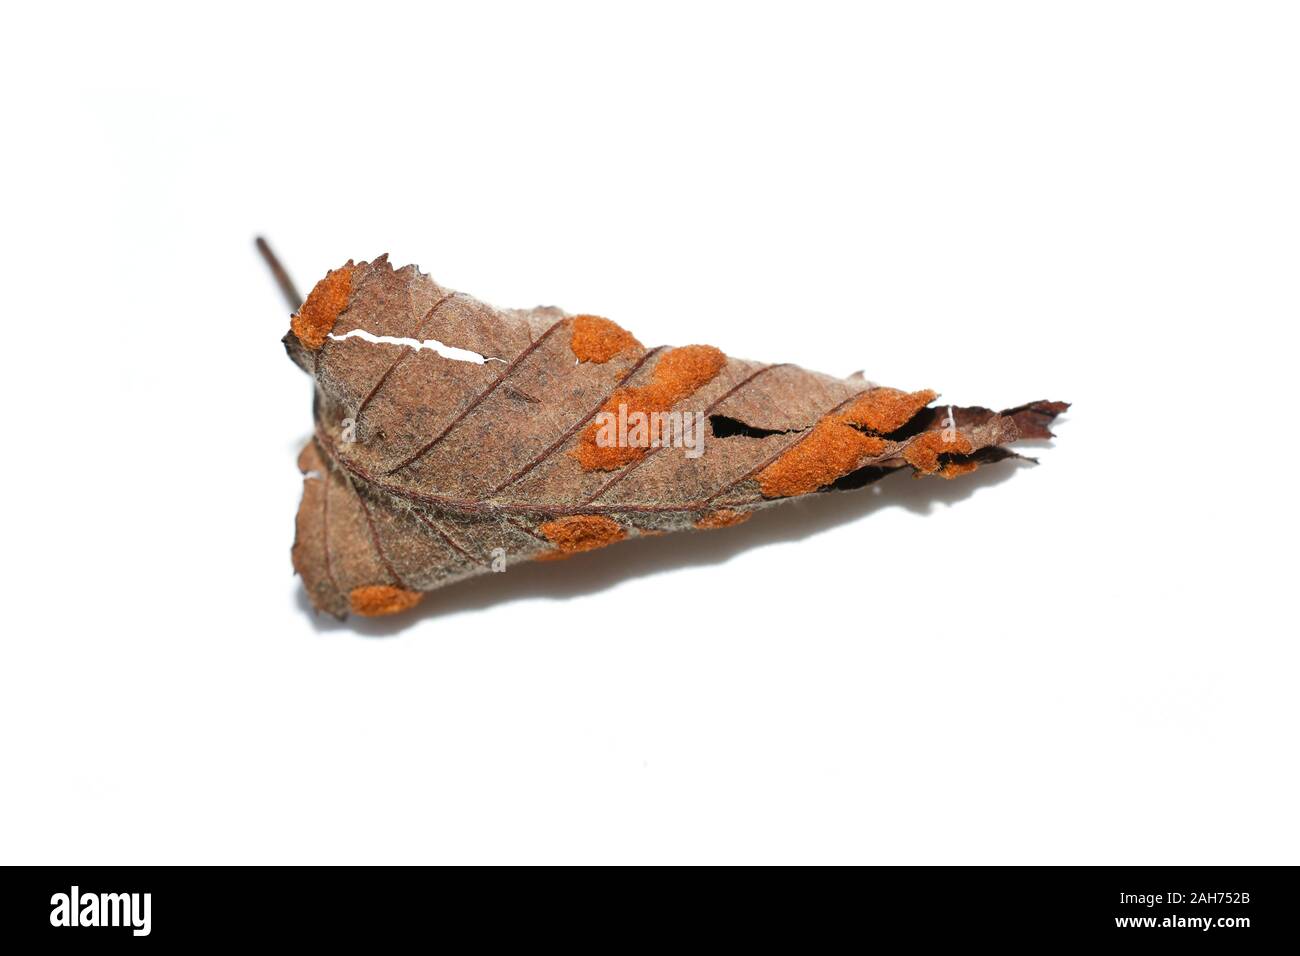 The rust fungus Melampsoridium hiratsukanum on the dead leaf of an alder tree Stock Photo